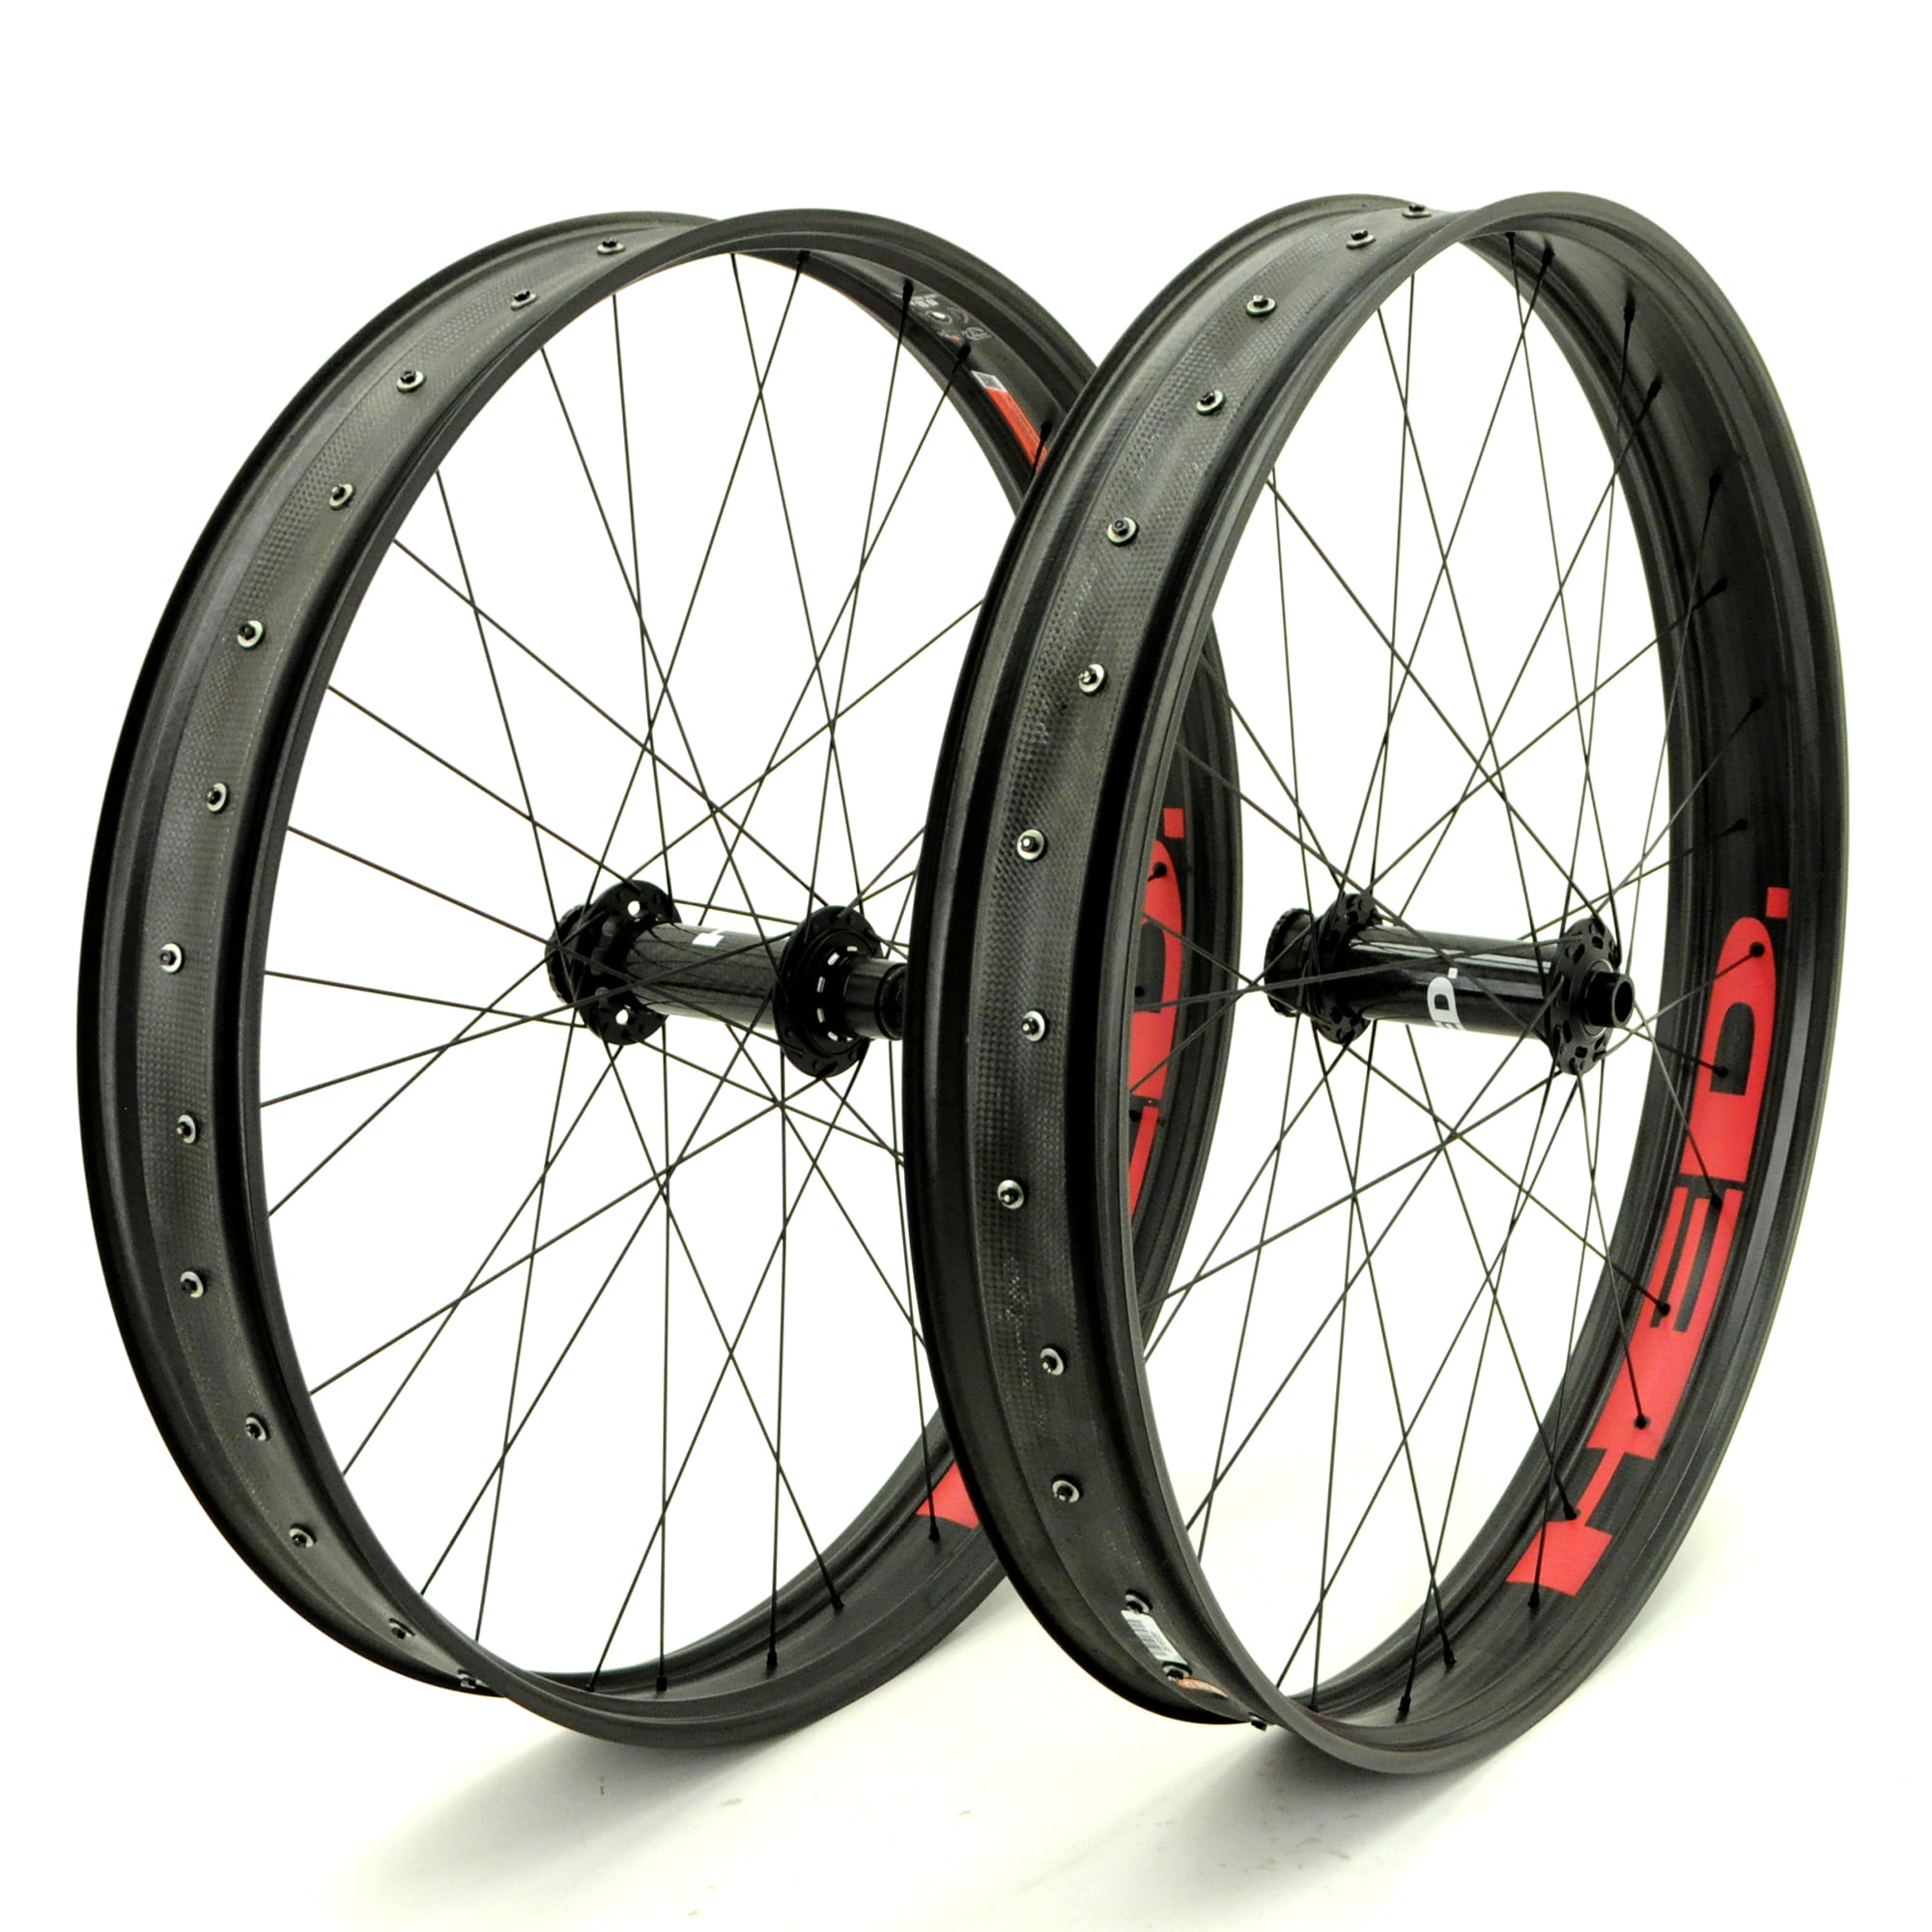 Carbon Bike Wheels For Sale : Carbon Wheels Bicycle Fiber Bike Road ...